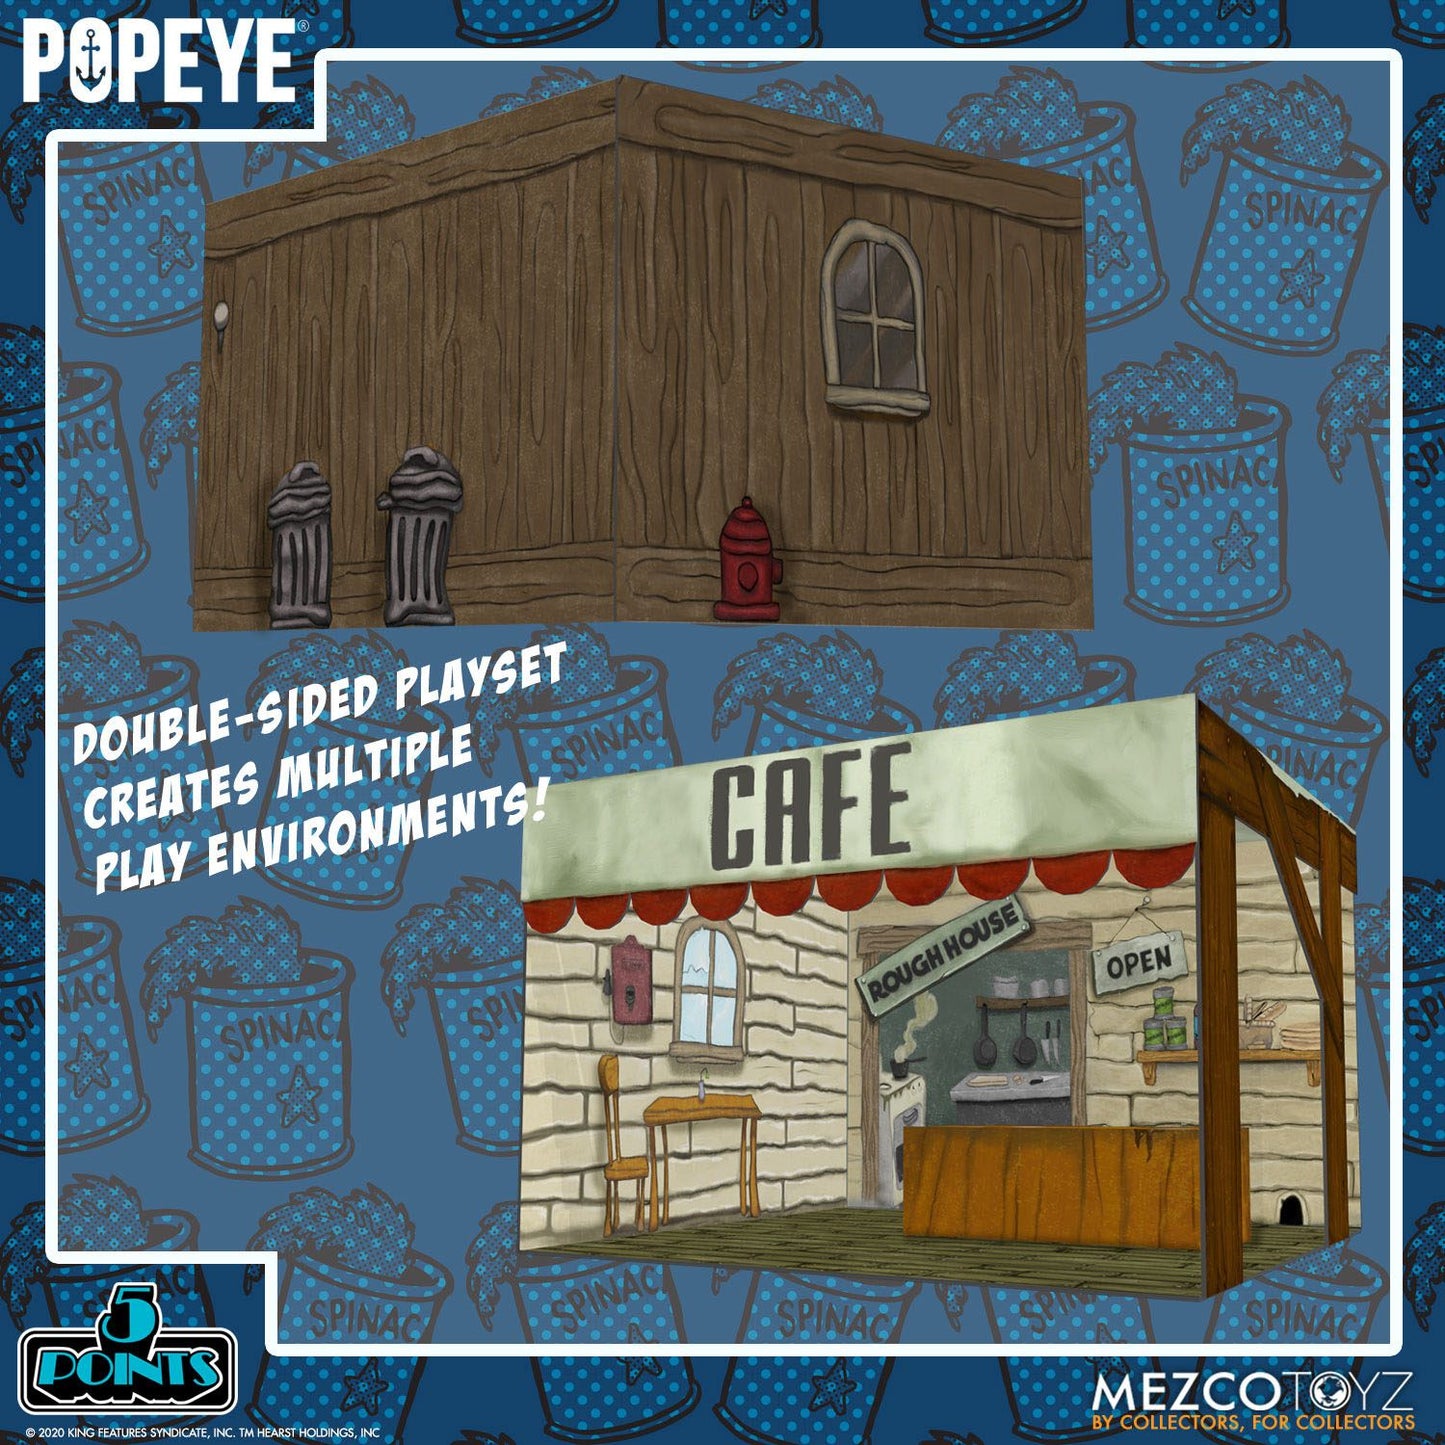 Popeye 5 Points Deluxe Box Set 9 cm